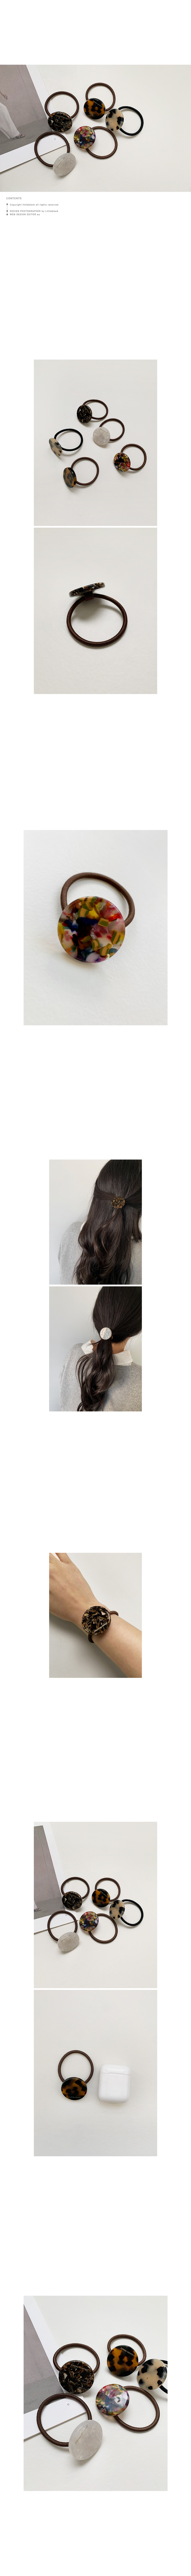 2-Piece Circular Pendant Hair Tie Set|